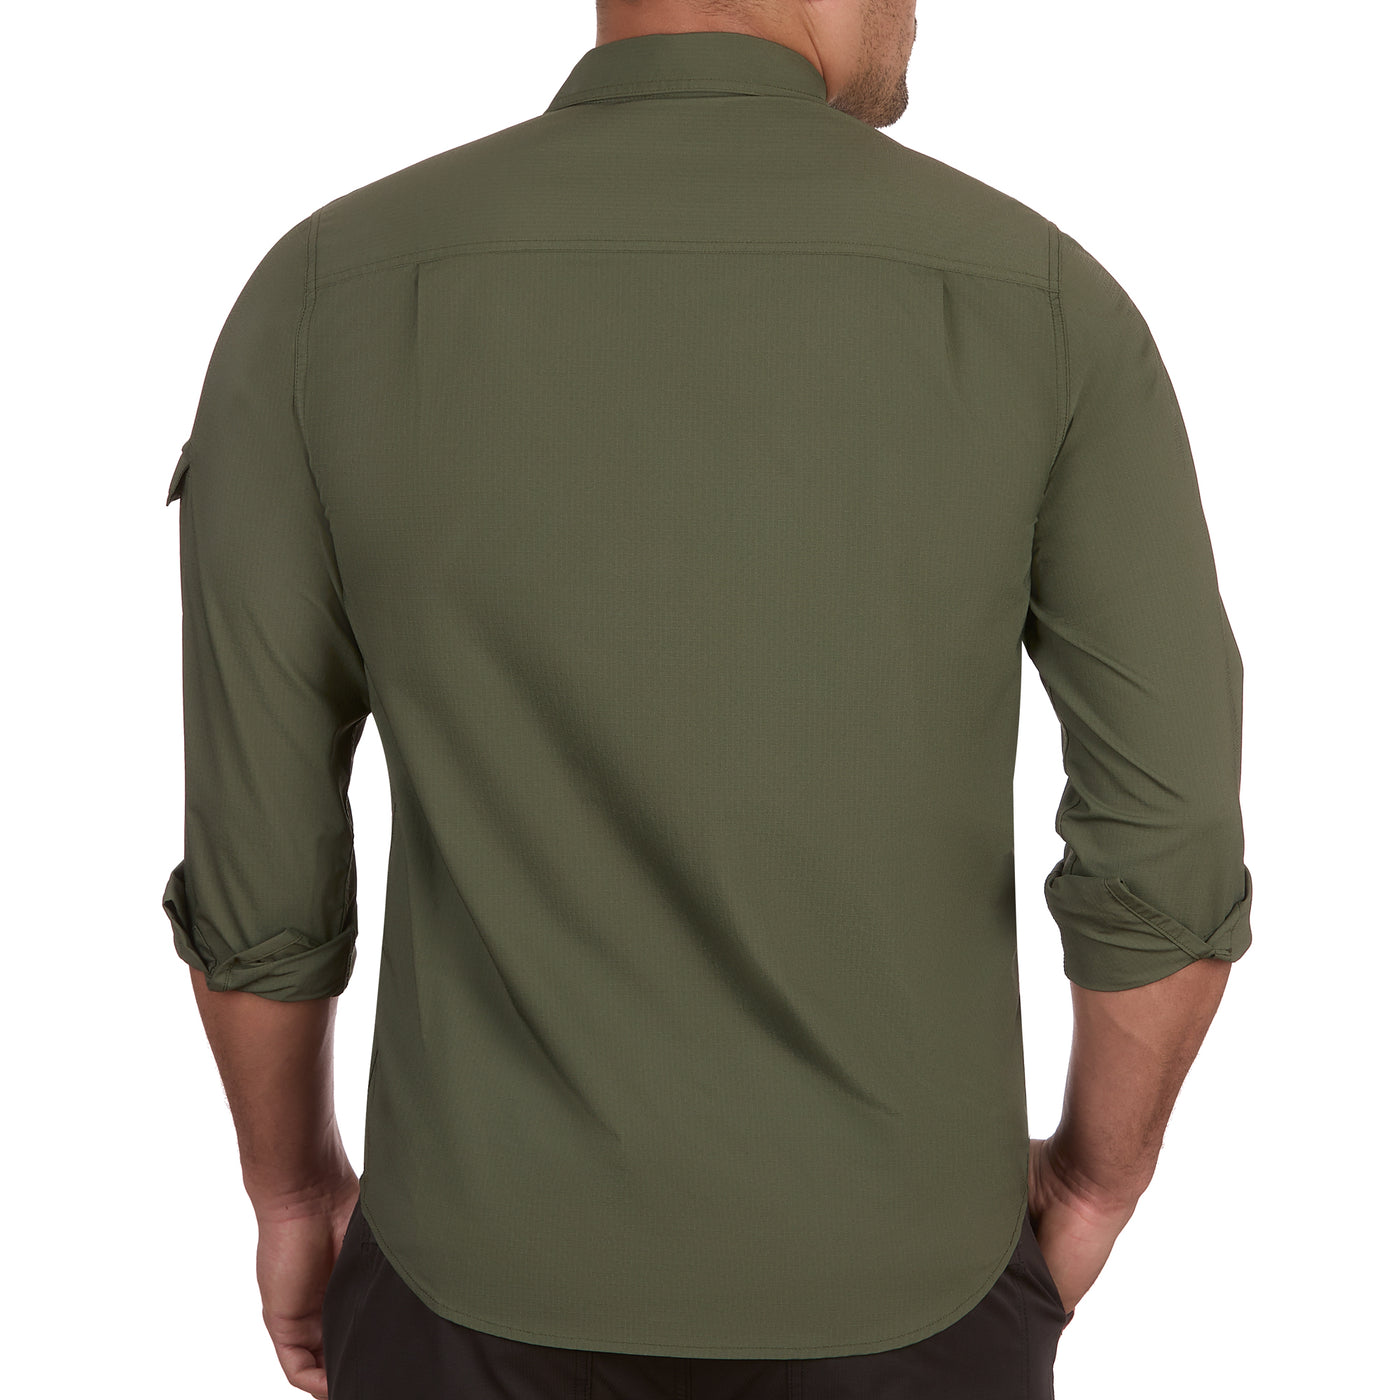 The American Outdoorsman Fishing Shirt size 4XL